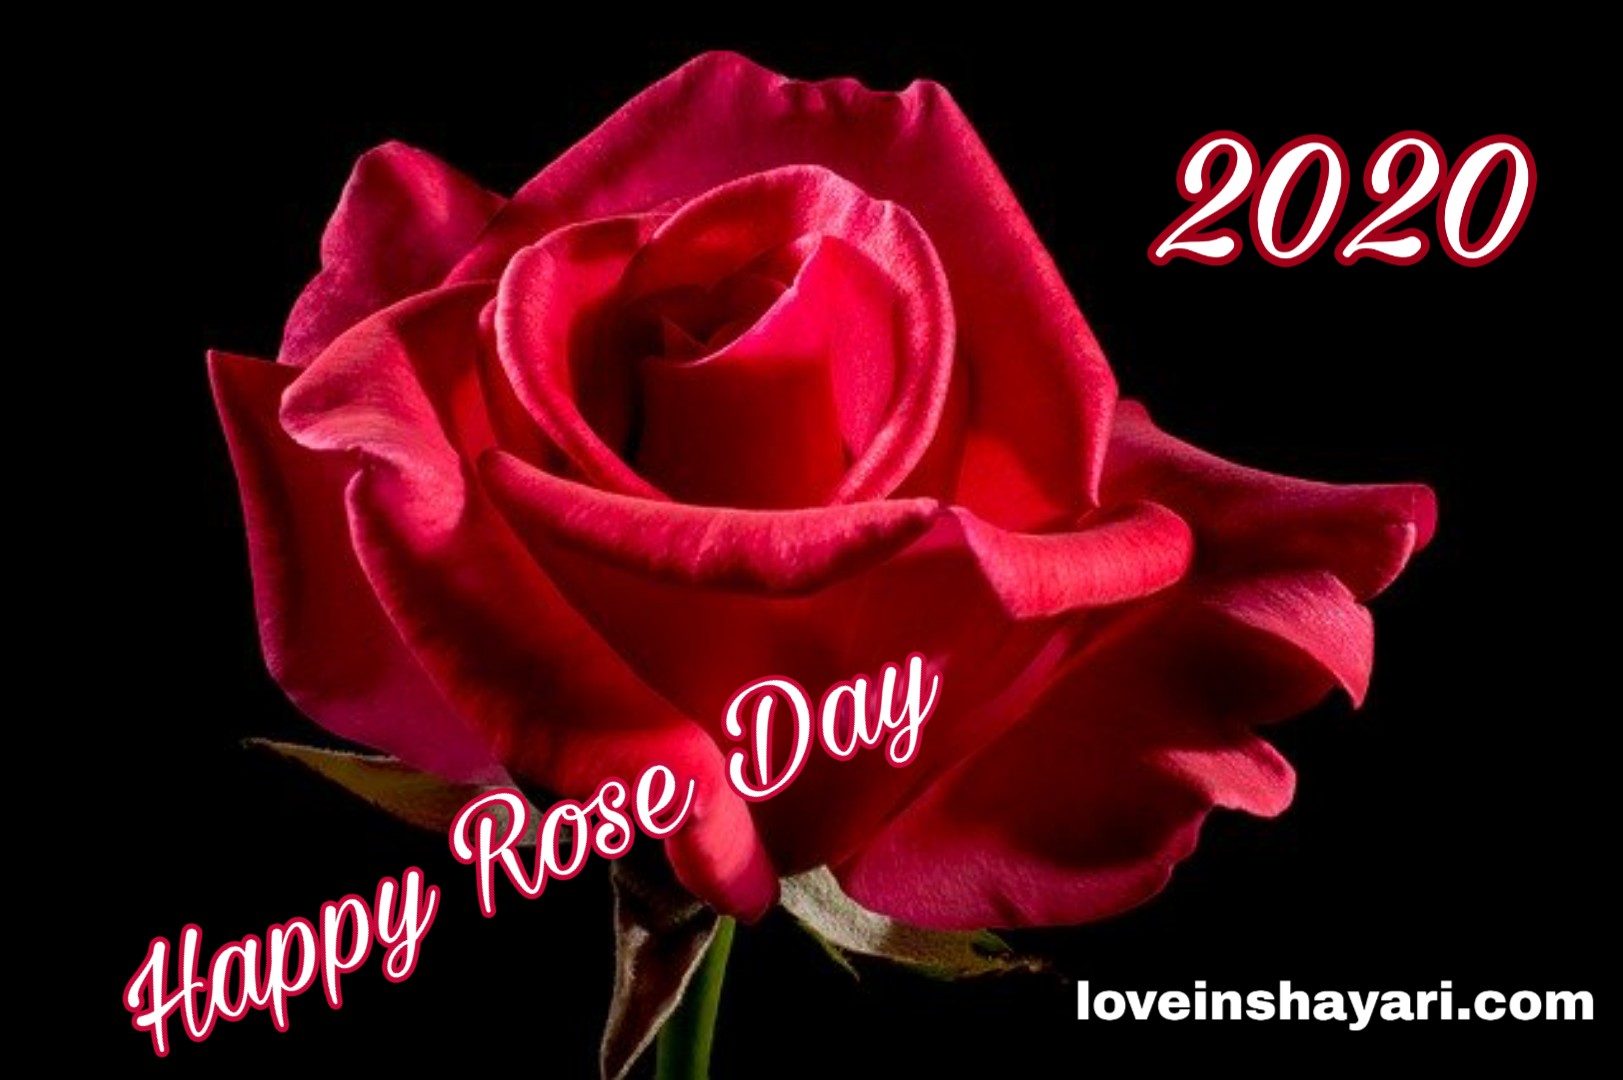 Happy rose day